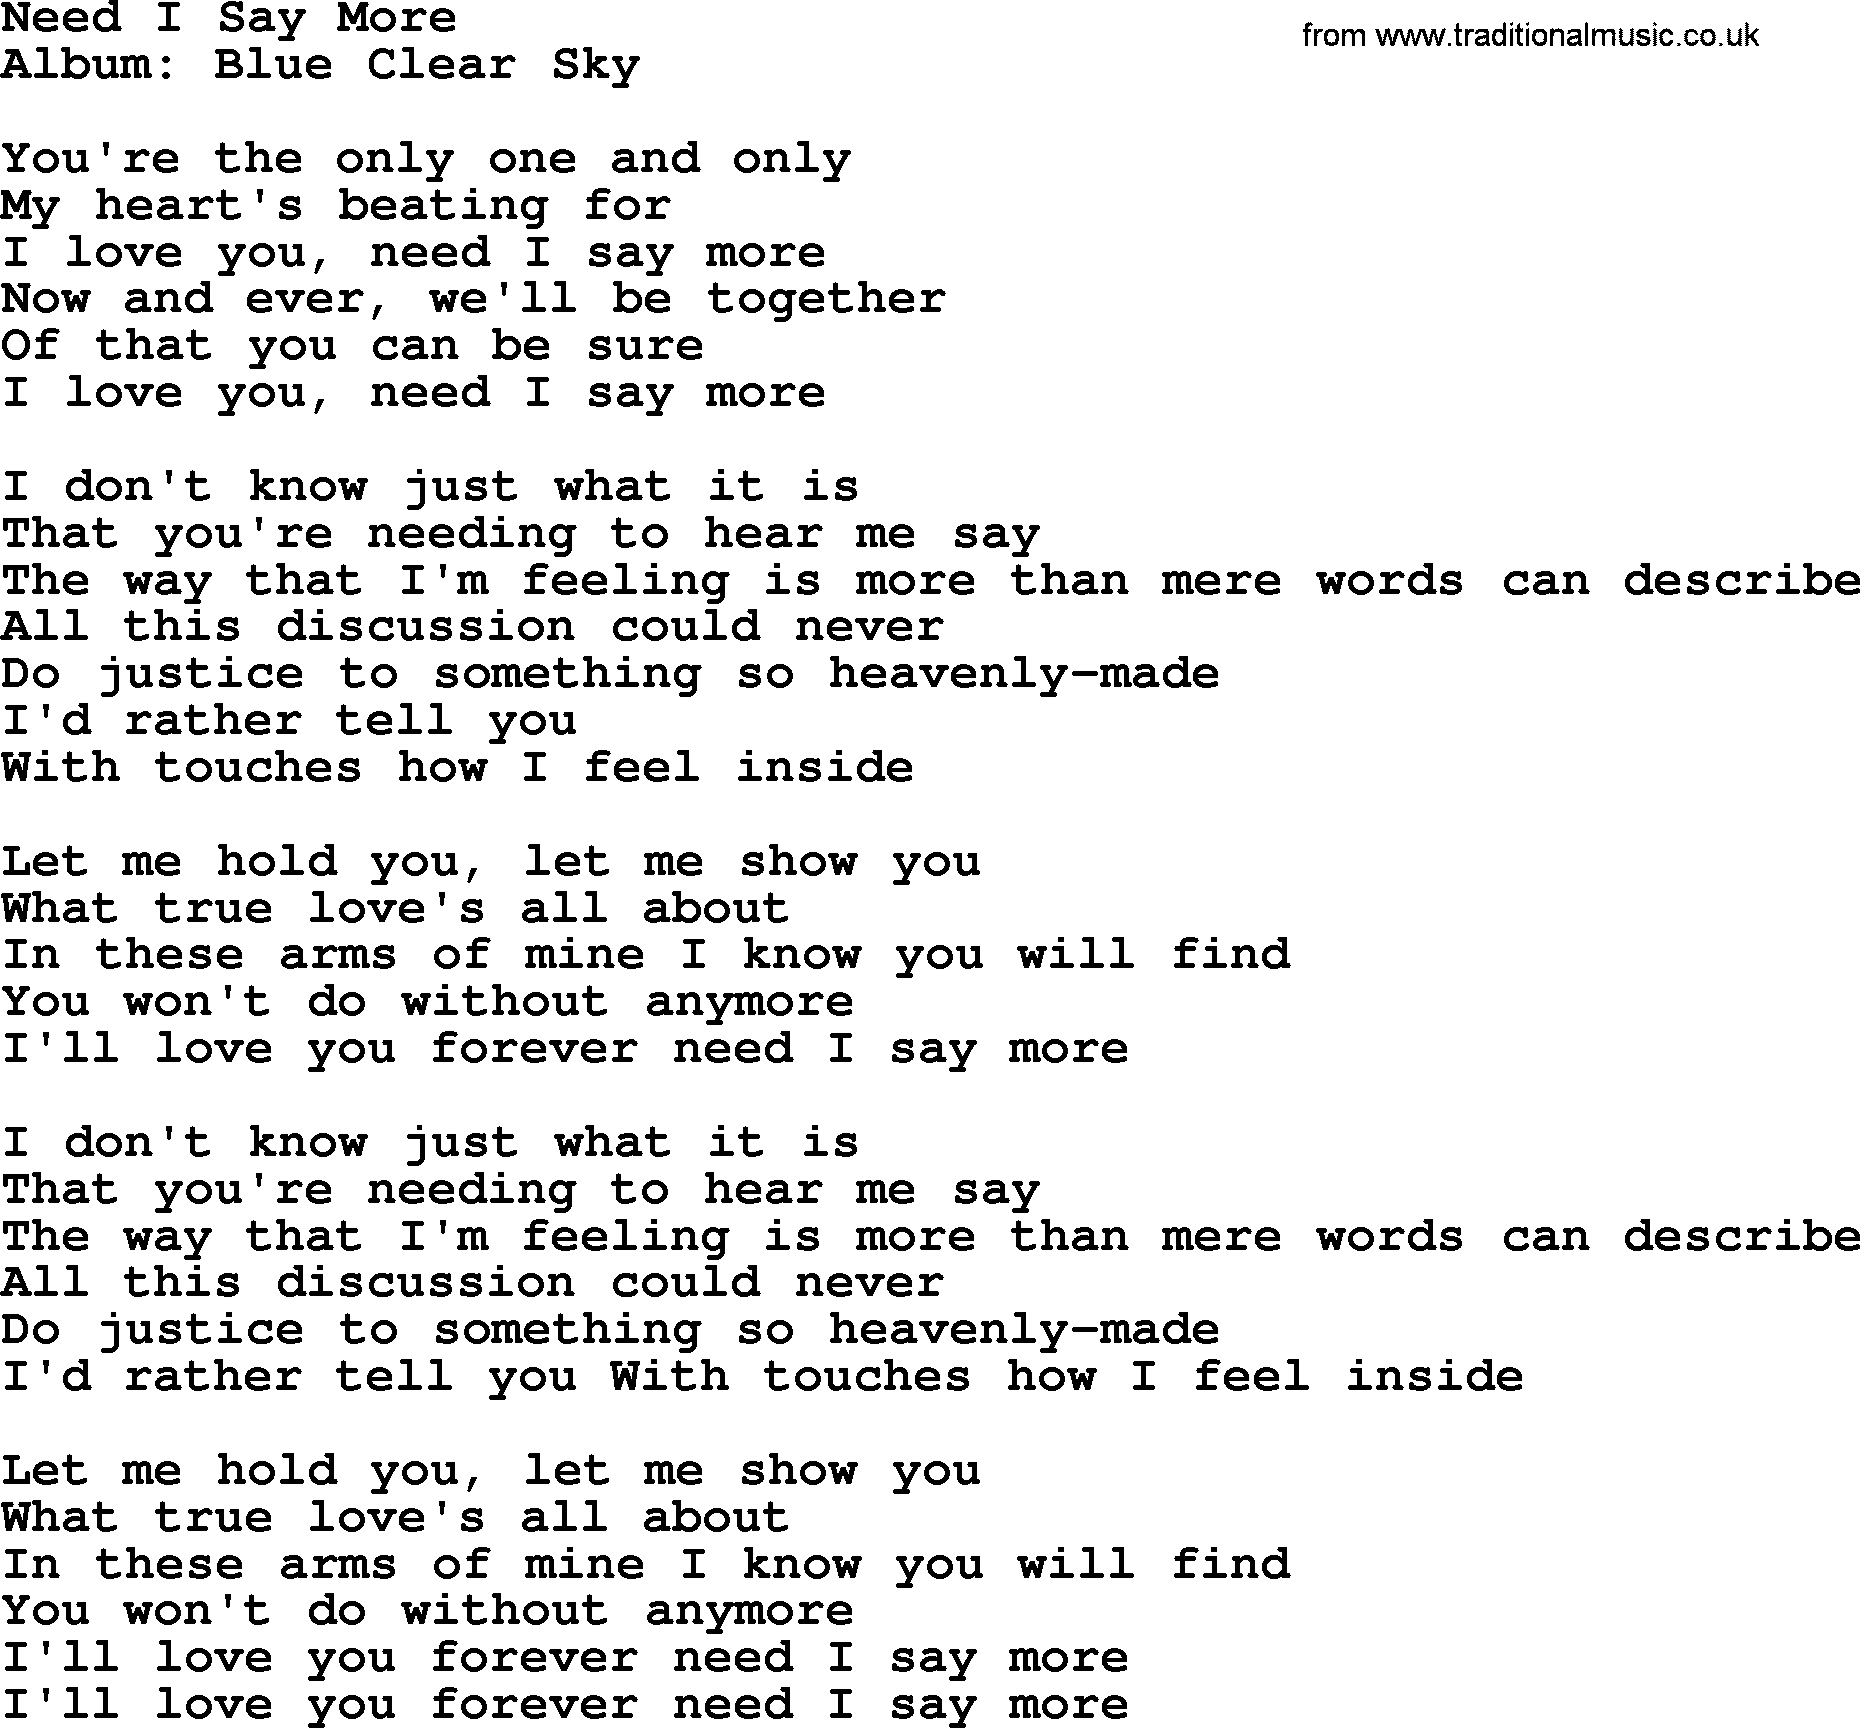 George Strait song: Need I Say More, lyrics